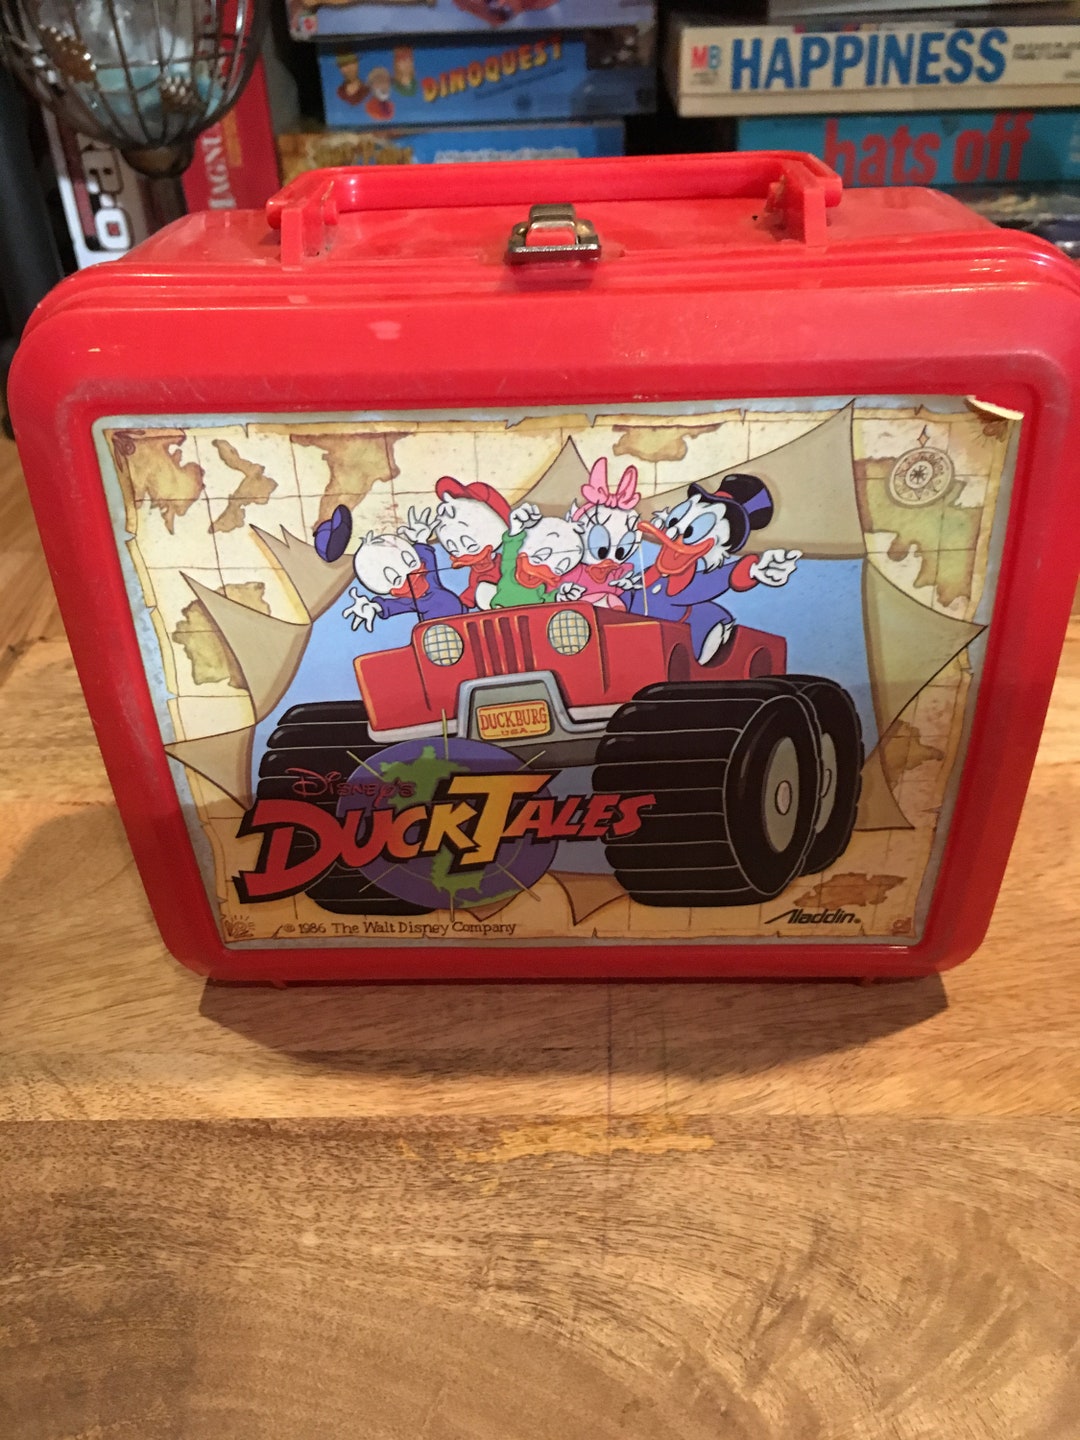 Vintage Aladdin Brand Disney Ducktales Lunch Box Rare - Etsy